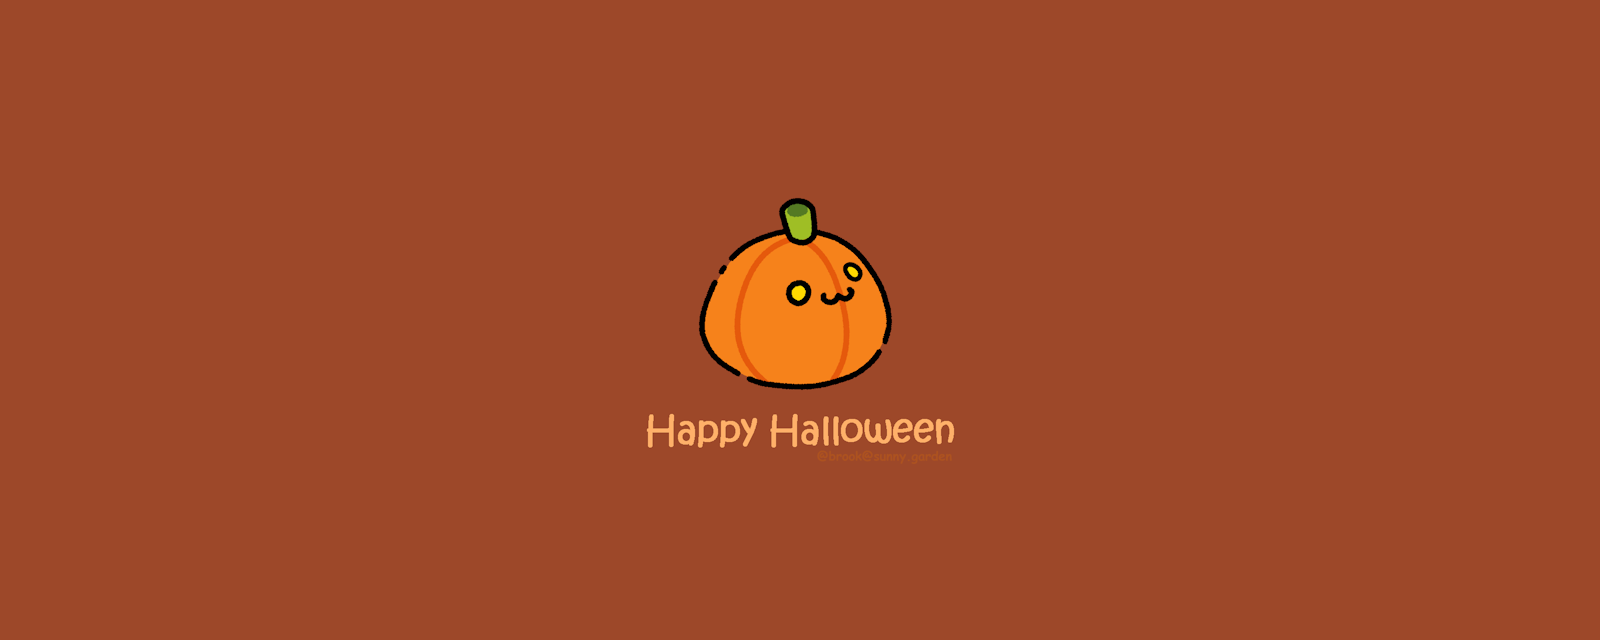 A simple cartoon pumpkin making a cute face. Below reads: Happy Halloween